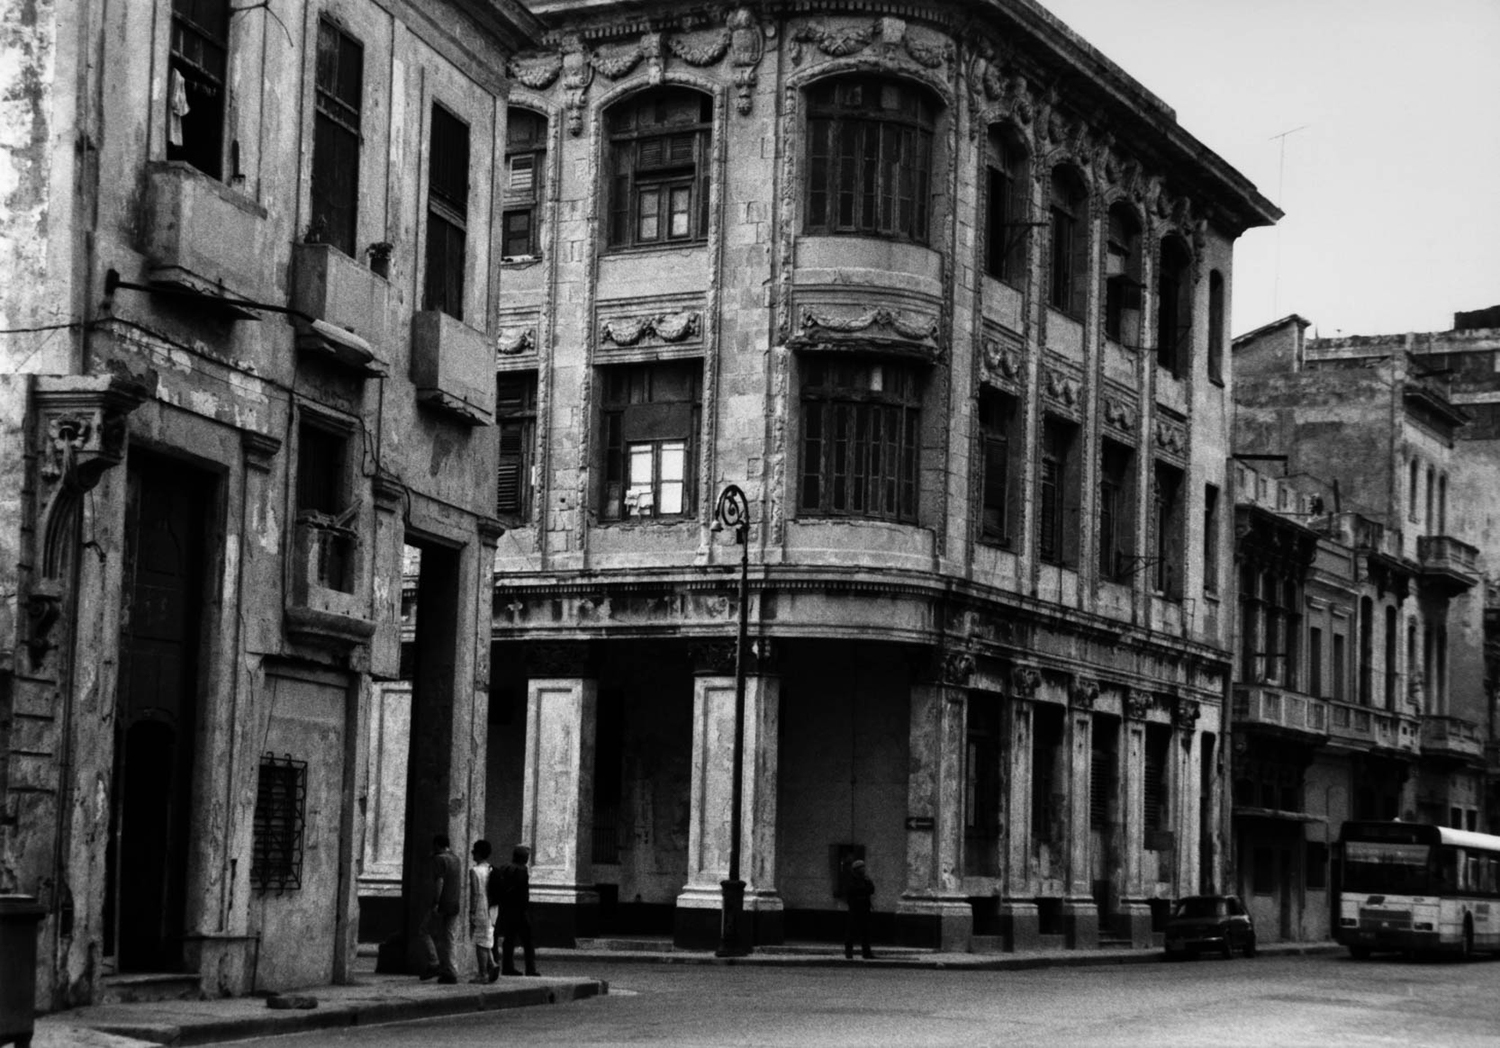 <p>Colonnaded buildings in central Havana.</p>